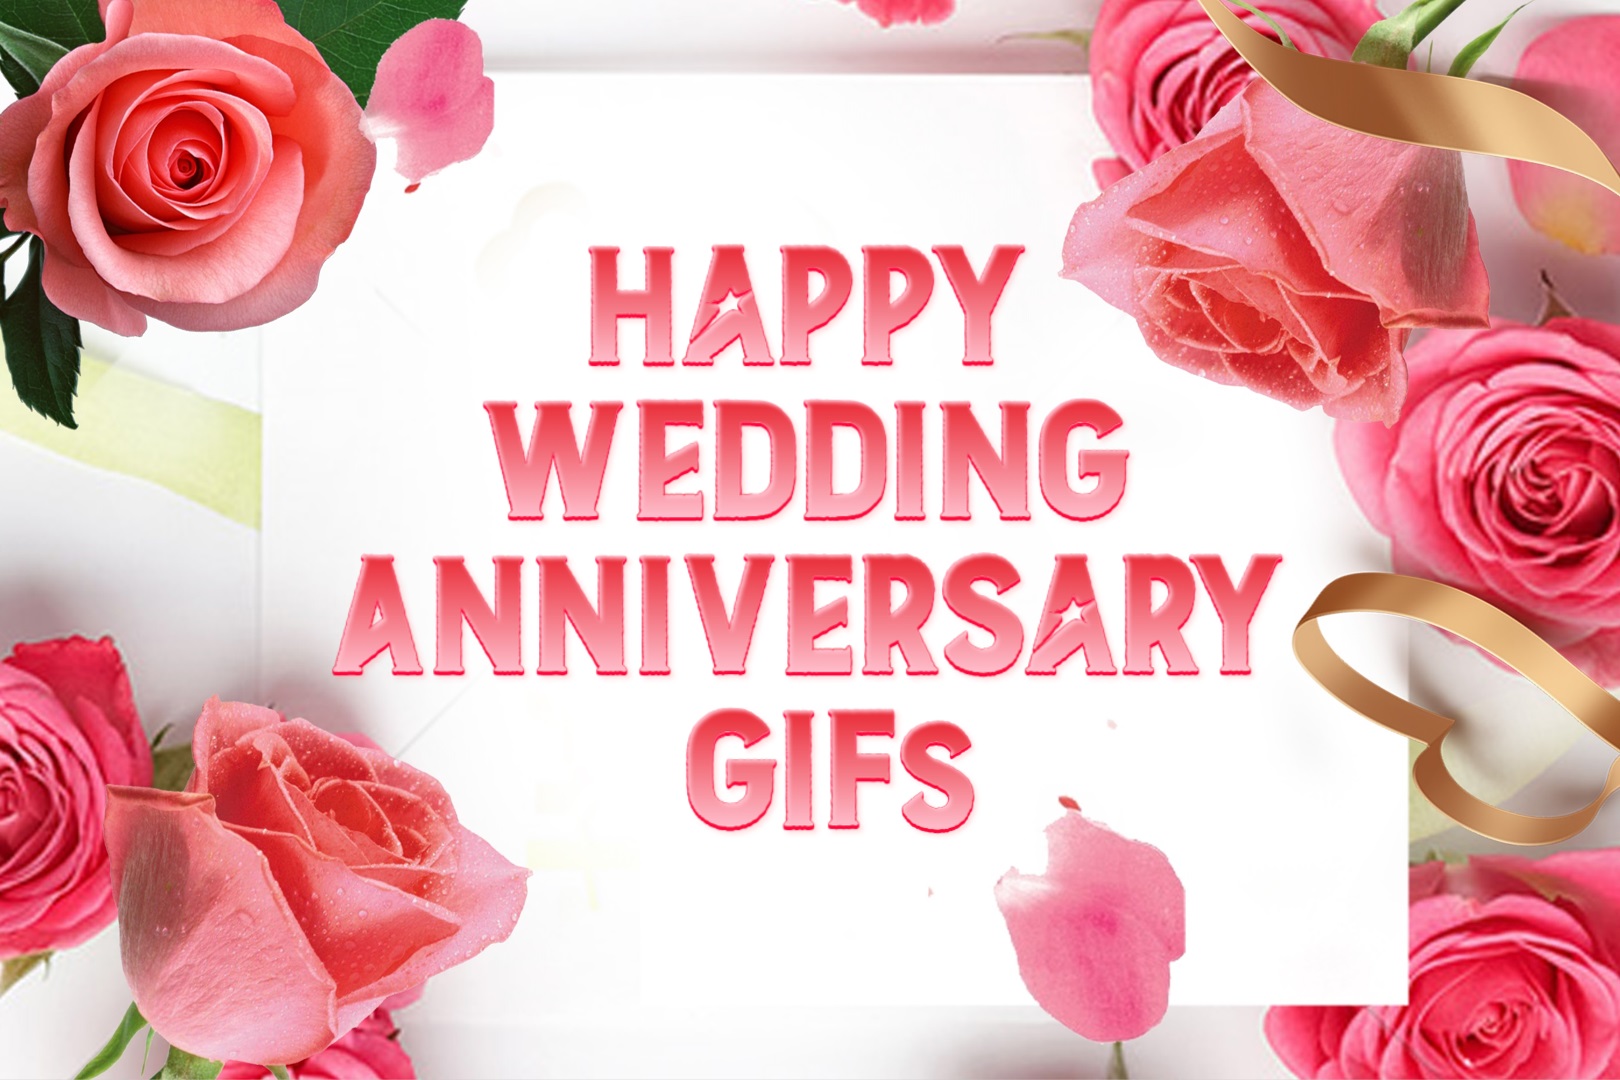 Happy Wedding Anniversary Animated GIFs | SuperbWishes.com